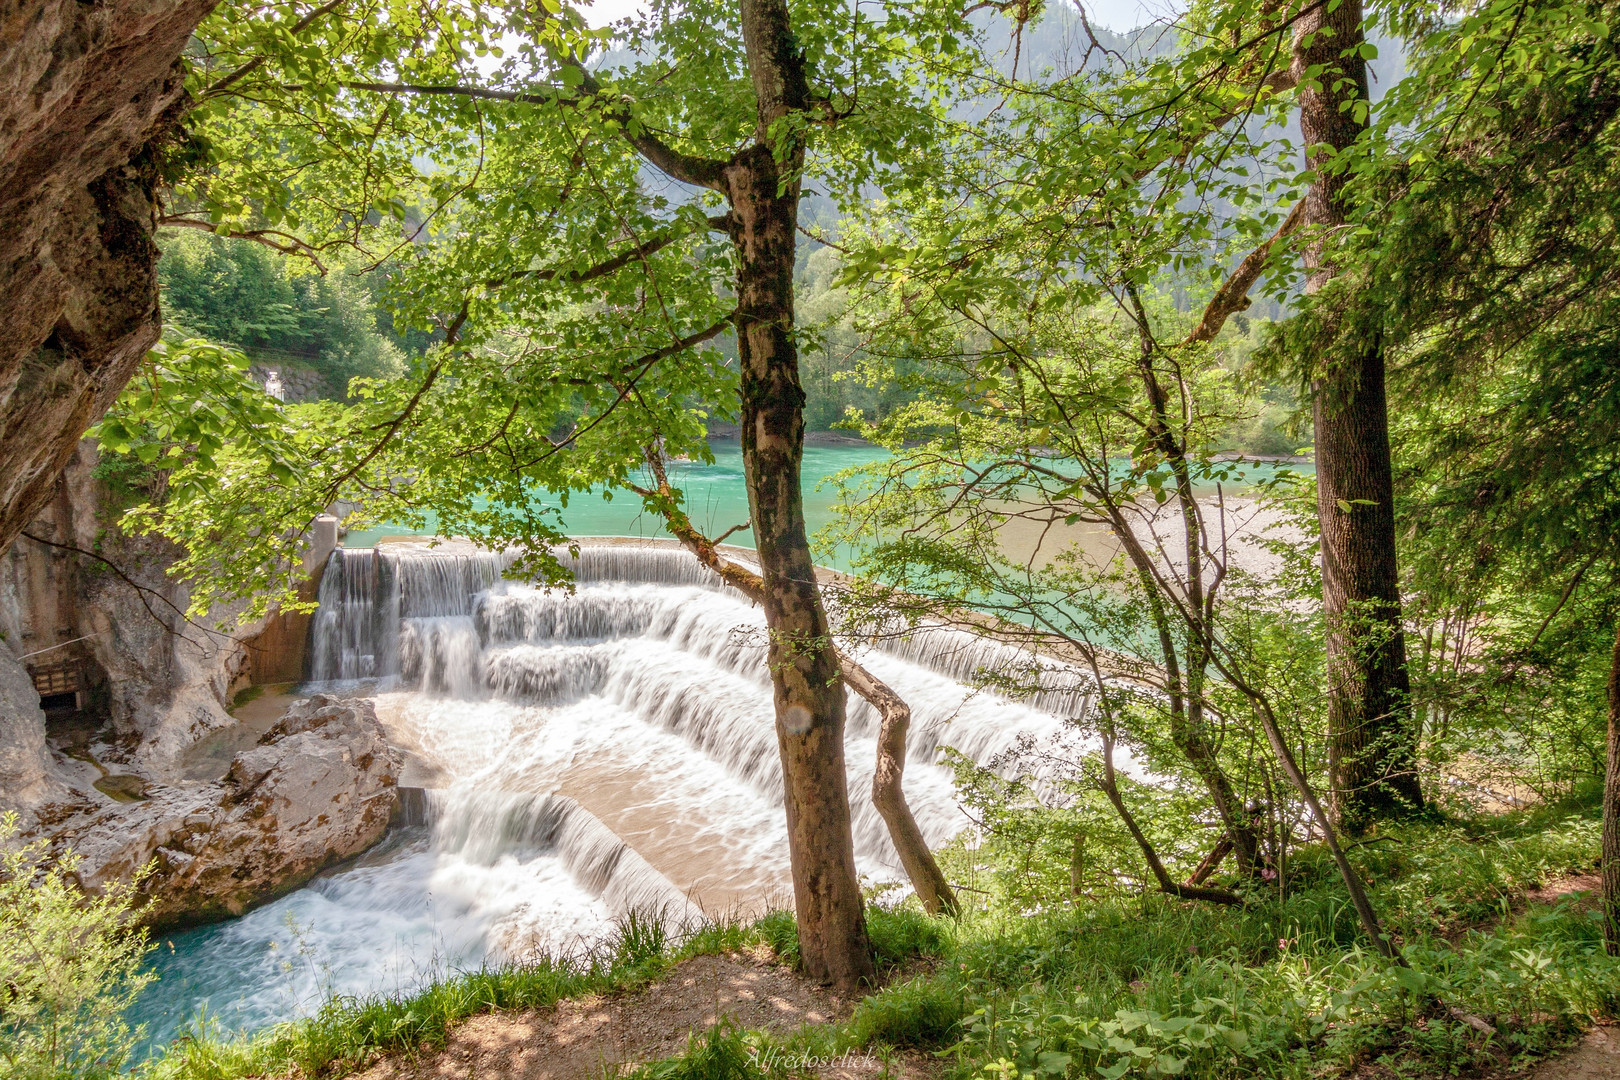  Wasserfall am Lech